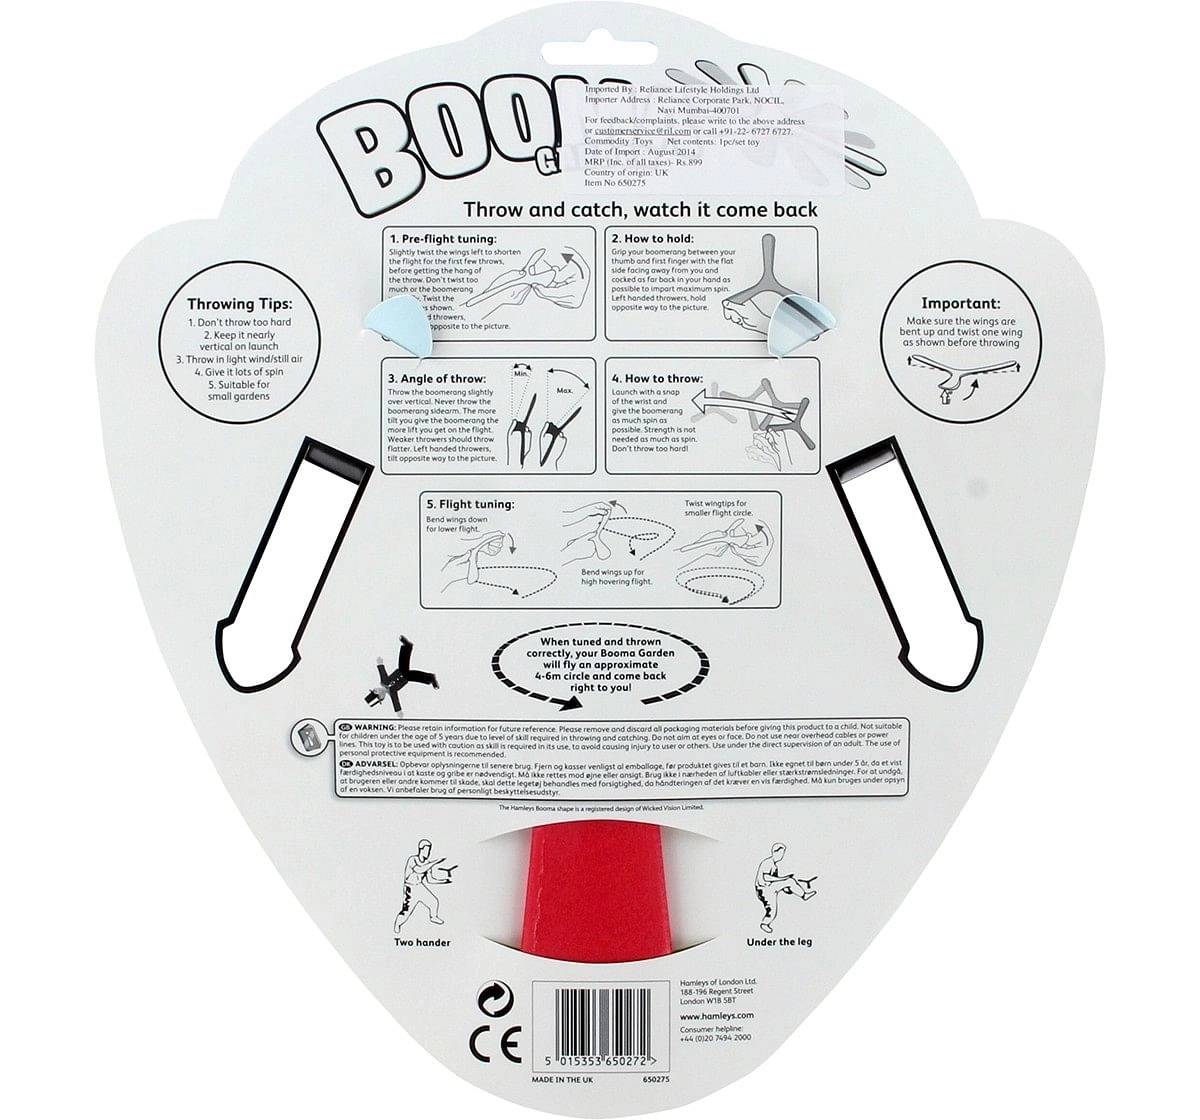 Wicked Hamleys Indoor Boomerang  Impulse Toys for Kids age 5Y+ (Color May Very)